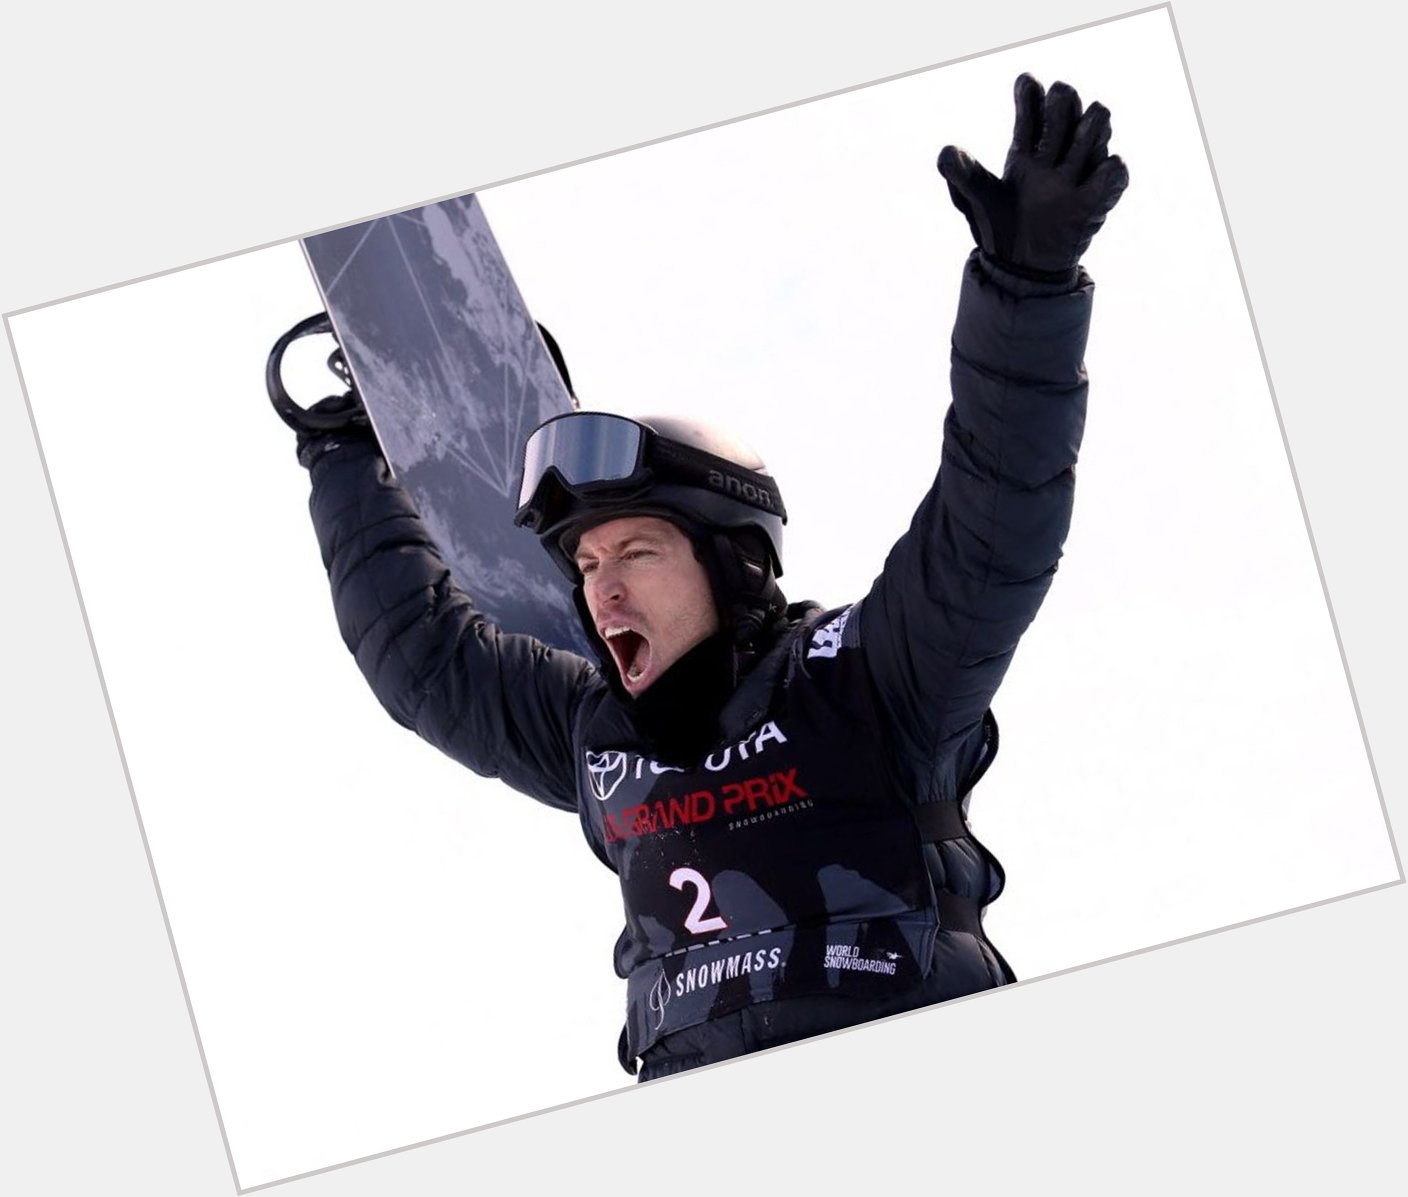 Happy birthday to snowboarder Shaun White who turns 33 today! 